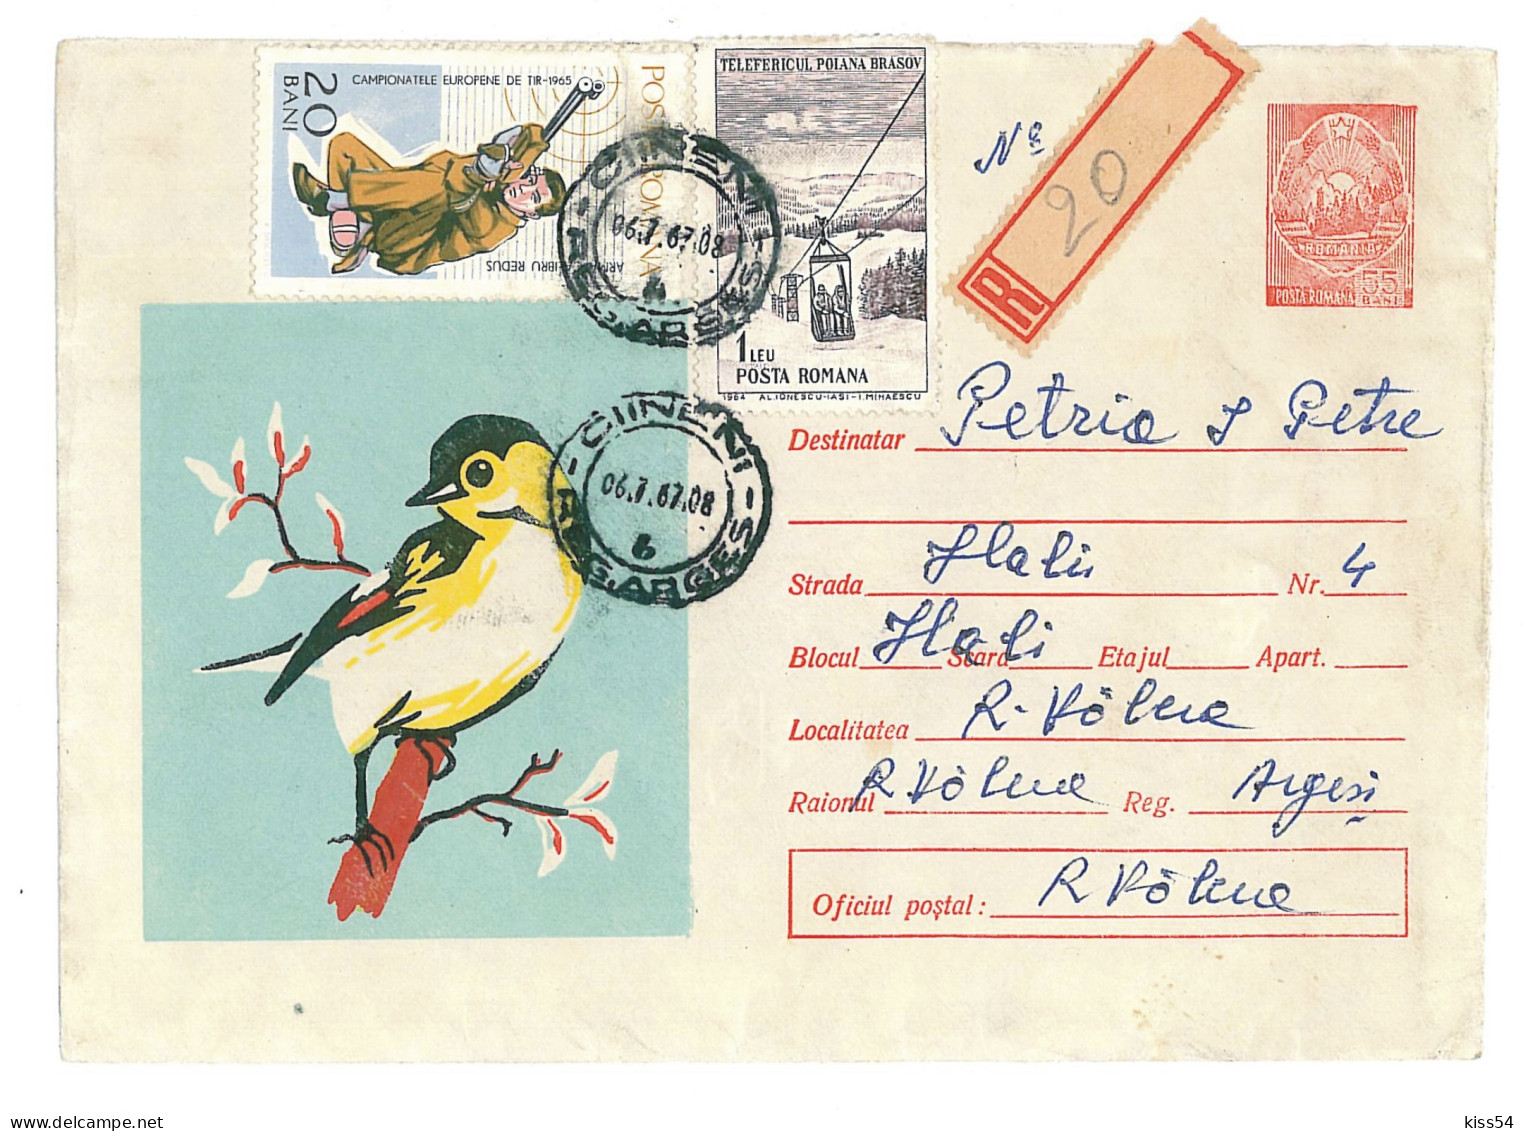 IP 67 - 035 BIRD, Titmouse, Romania - Registered Stationery - Used - 1967 - Ganzsachen